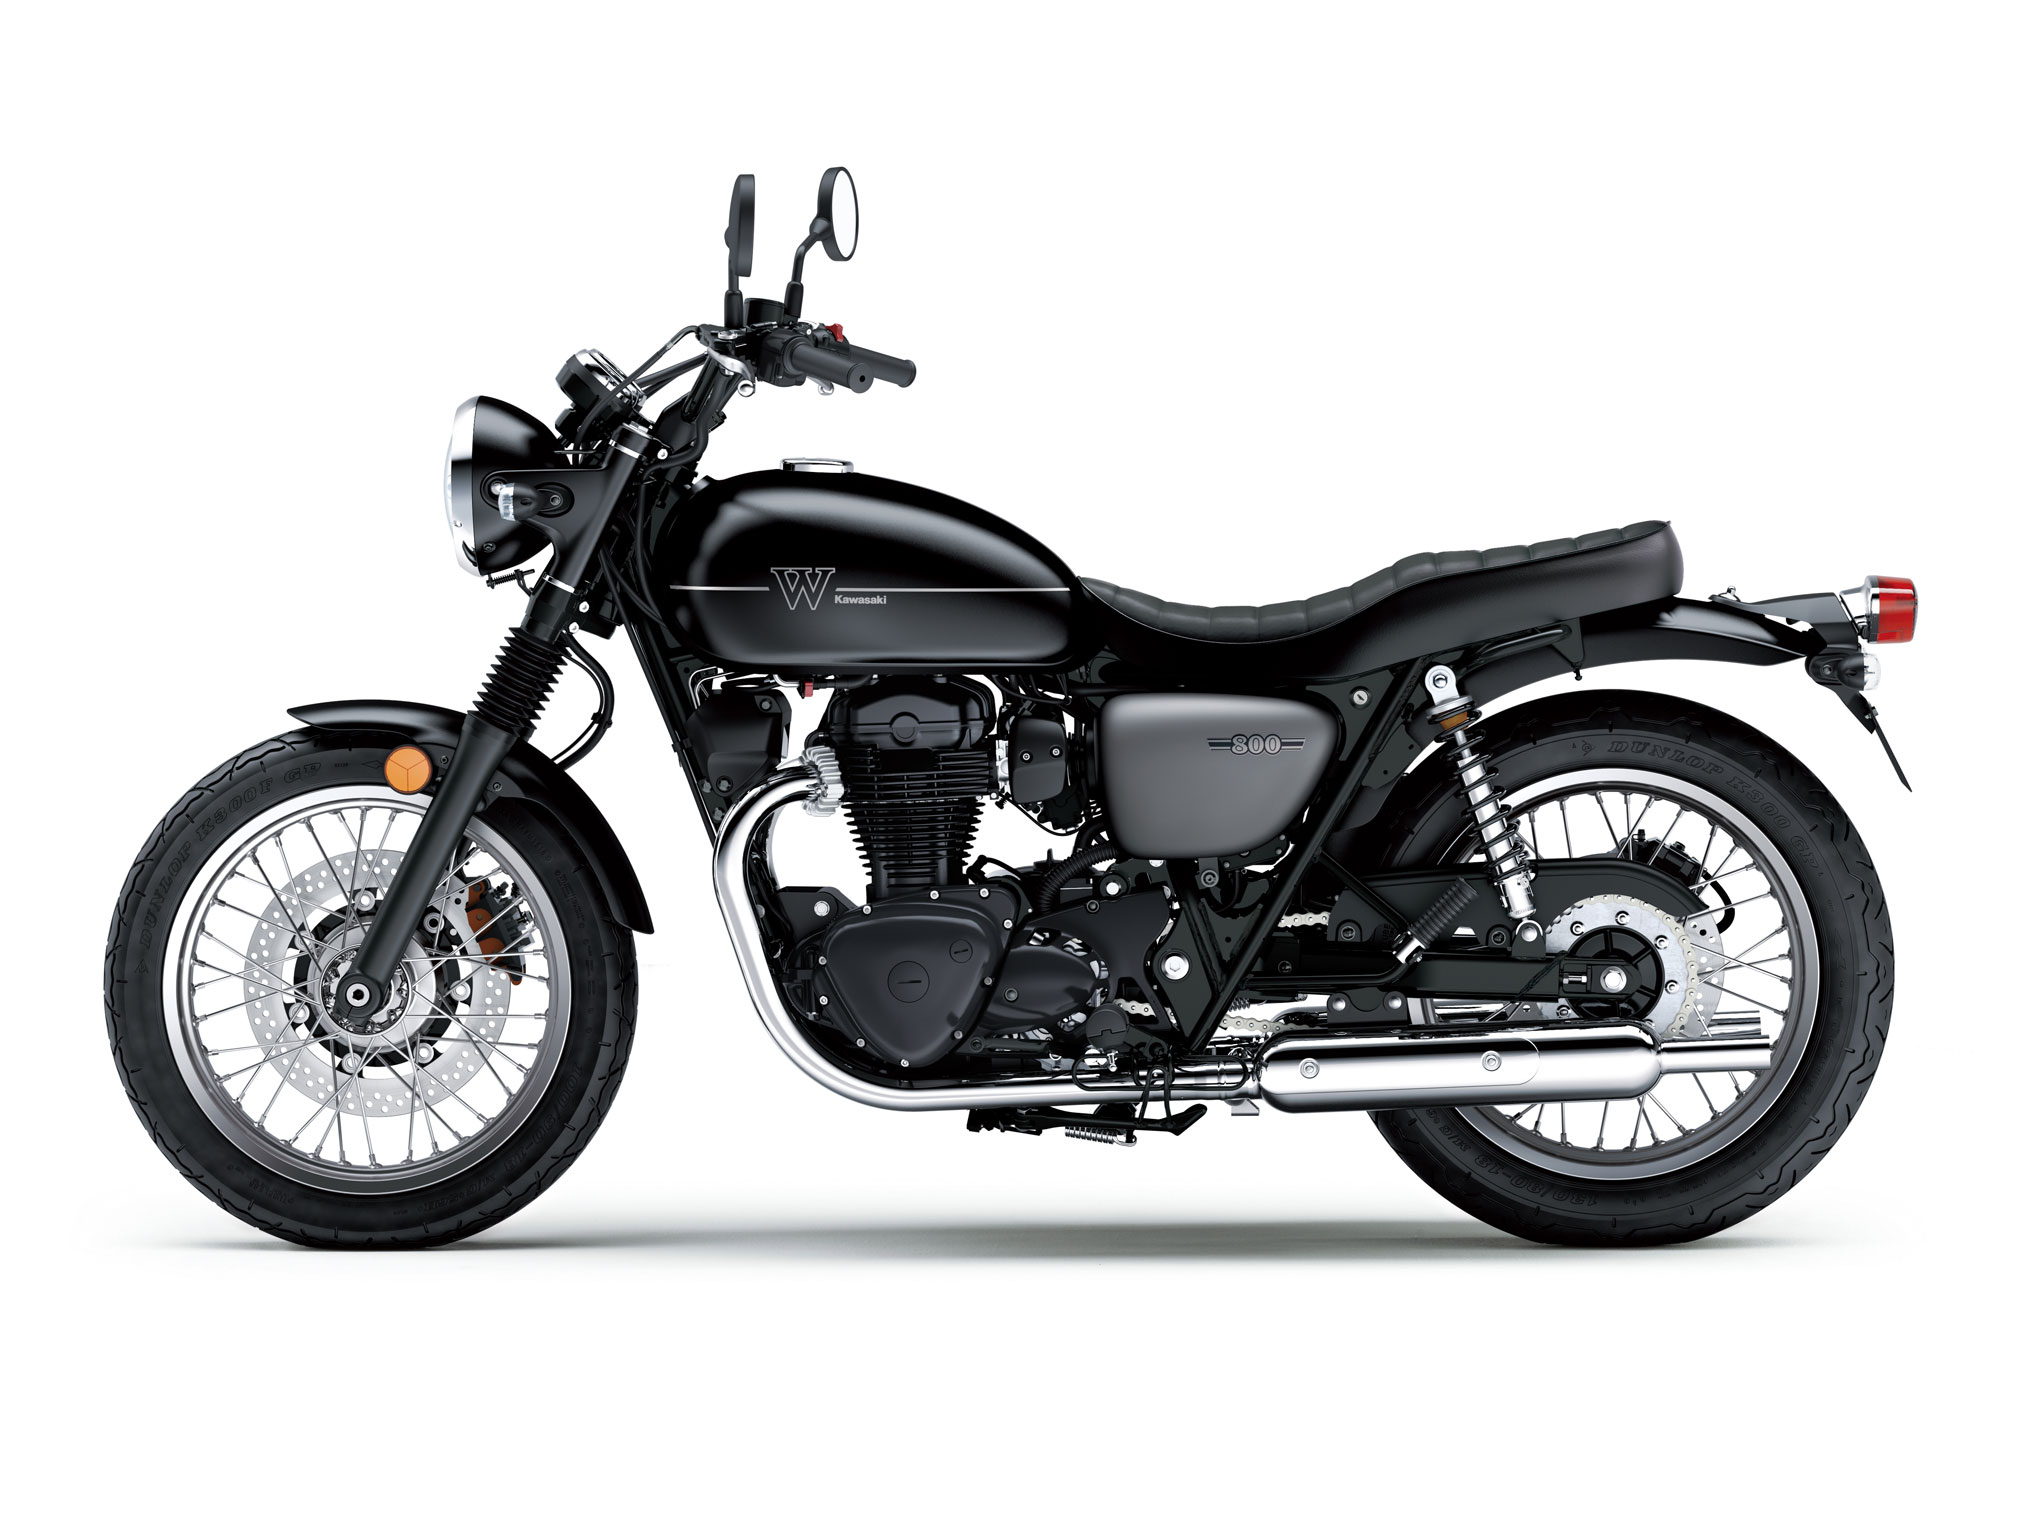 Kawasaki W800 Guide Total Motorcycle